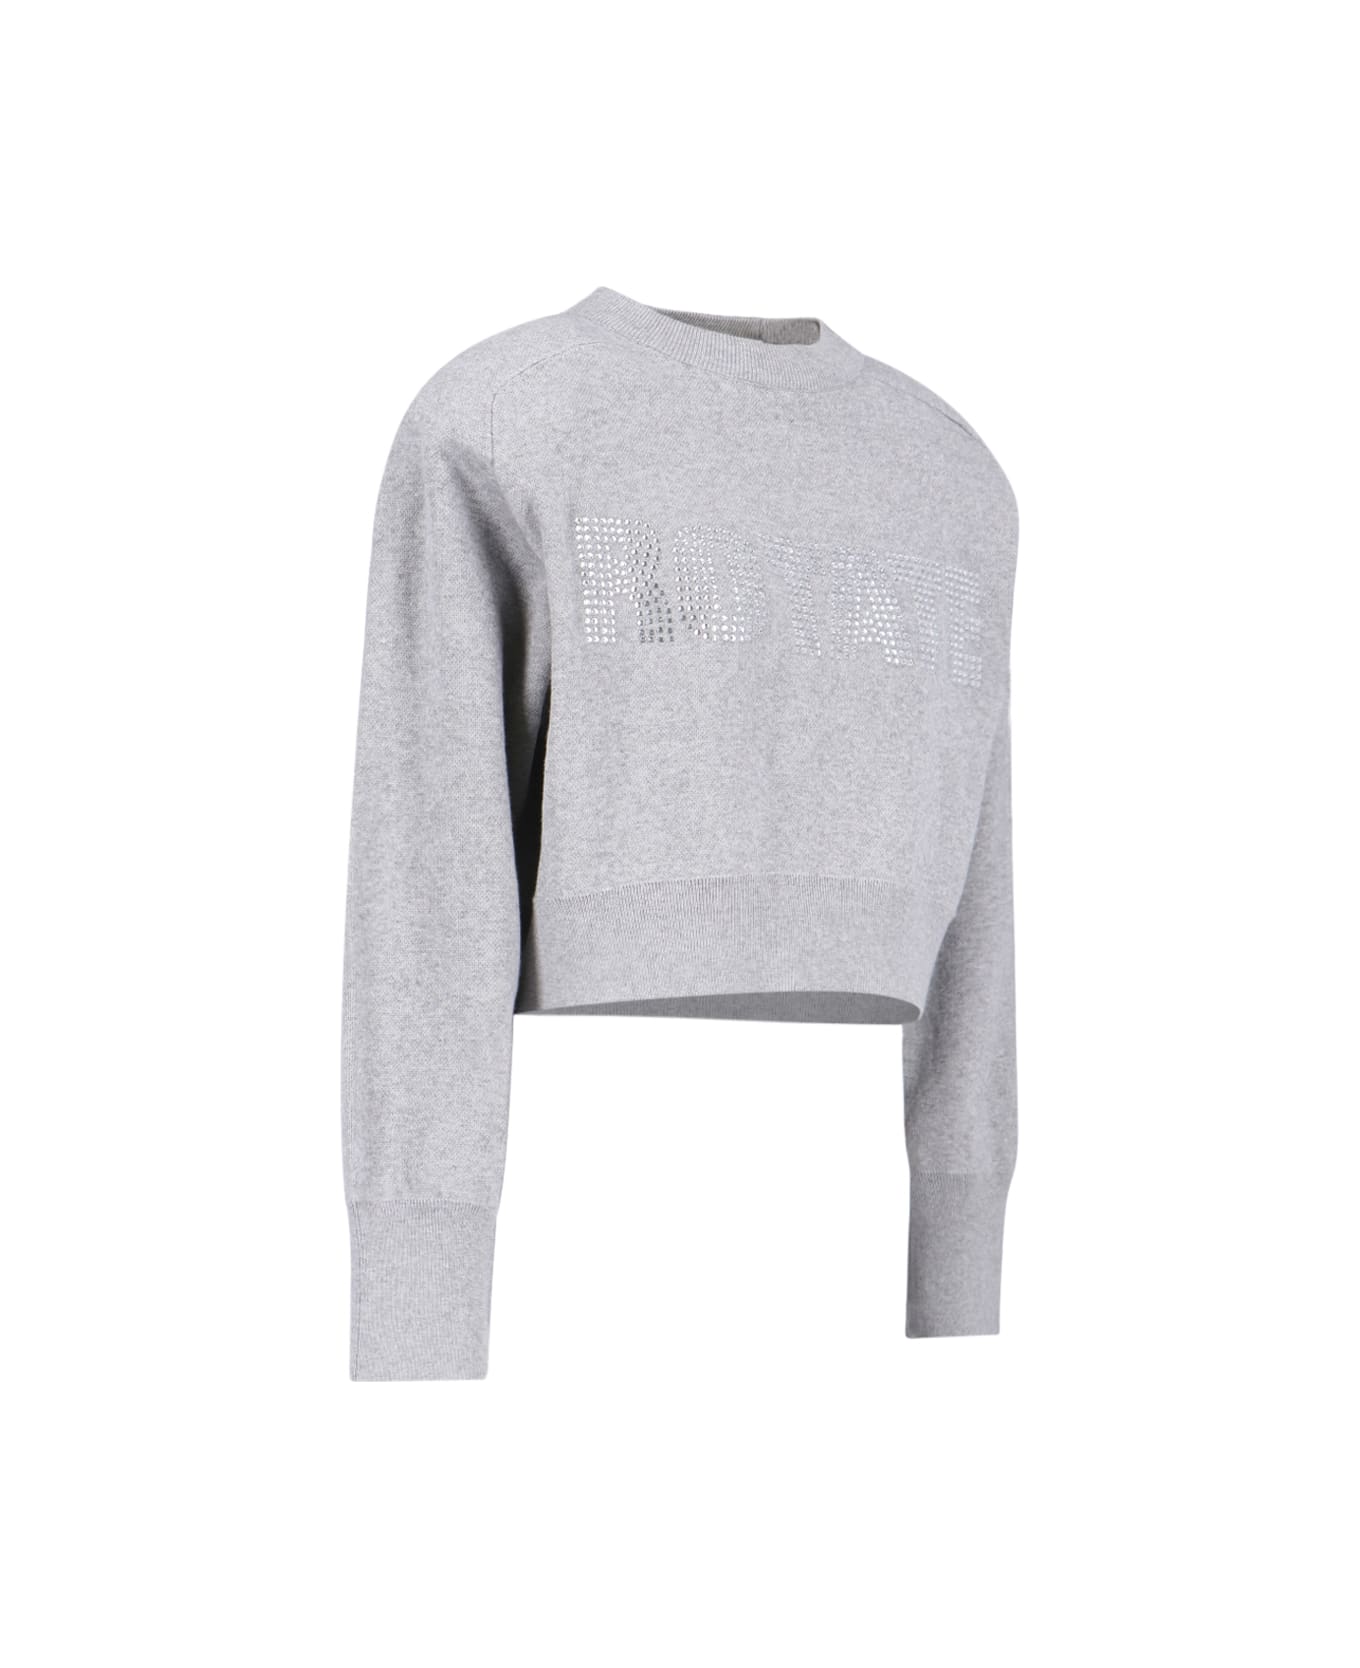 Rotate by Birger Christensen Logo Cropped Sweatshirt - Gray